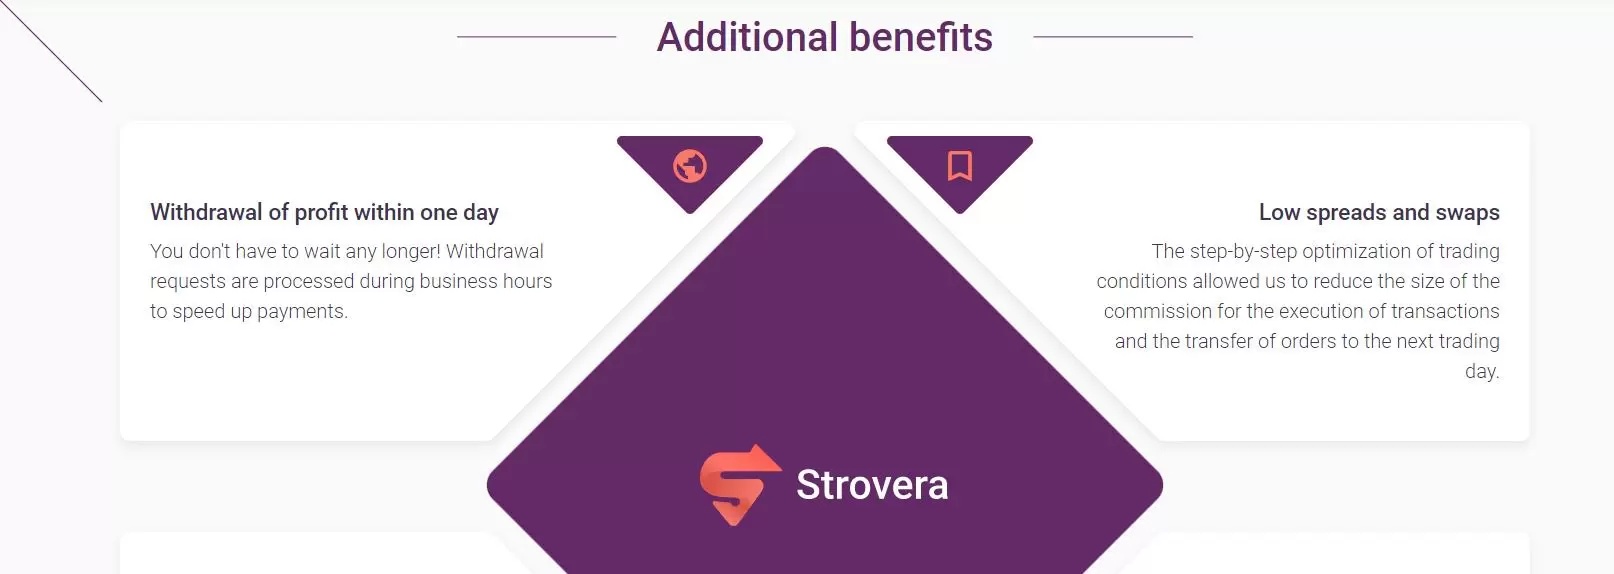 Website of the brokerage company STROVERA